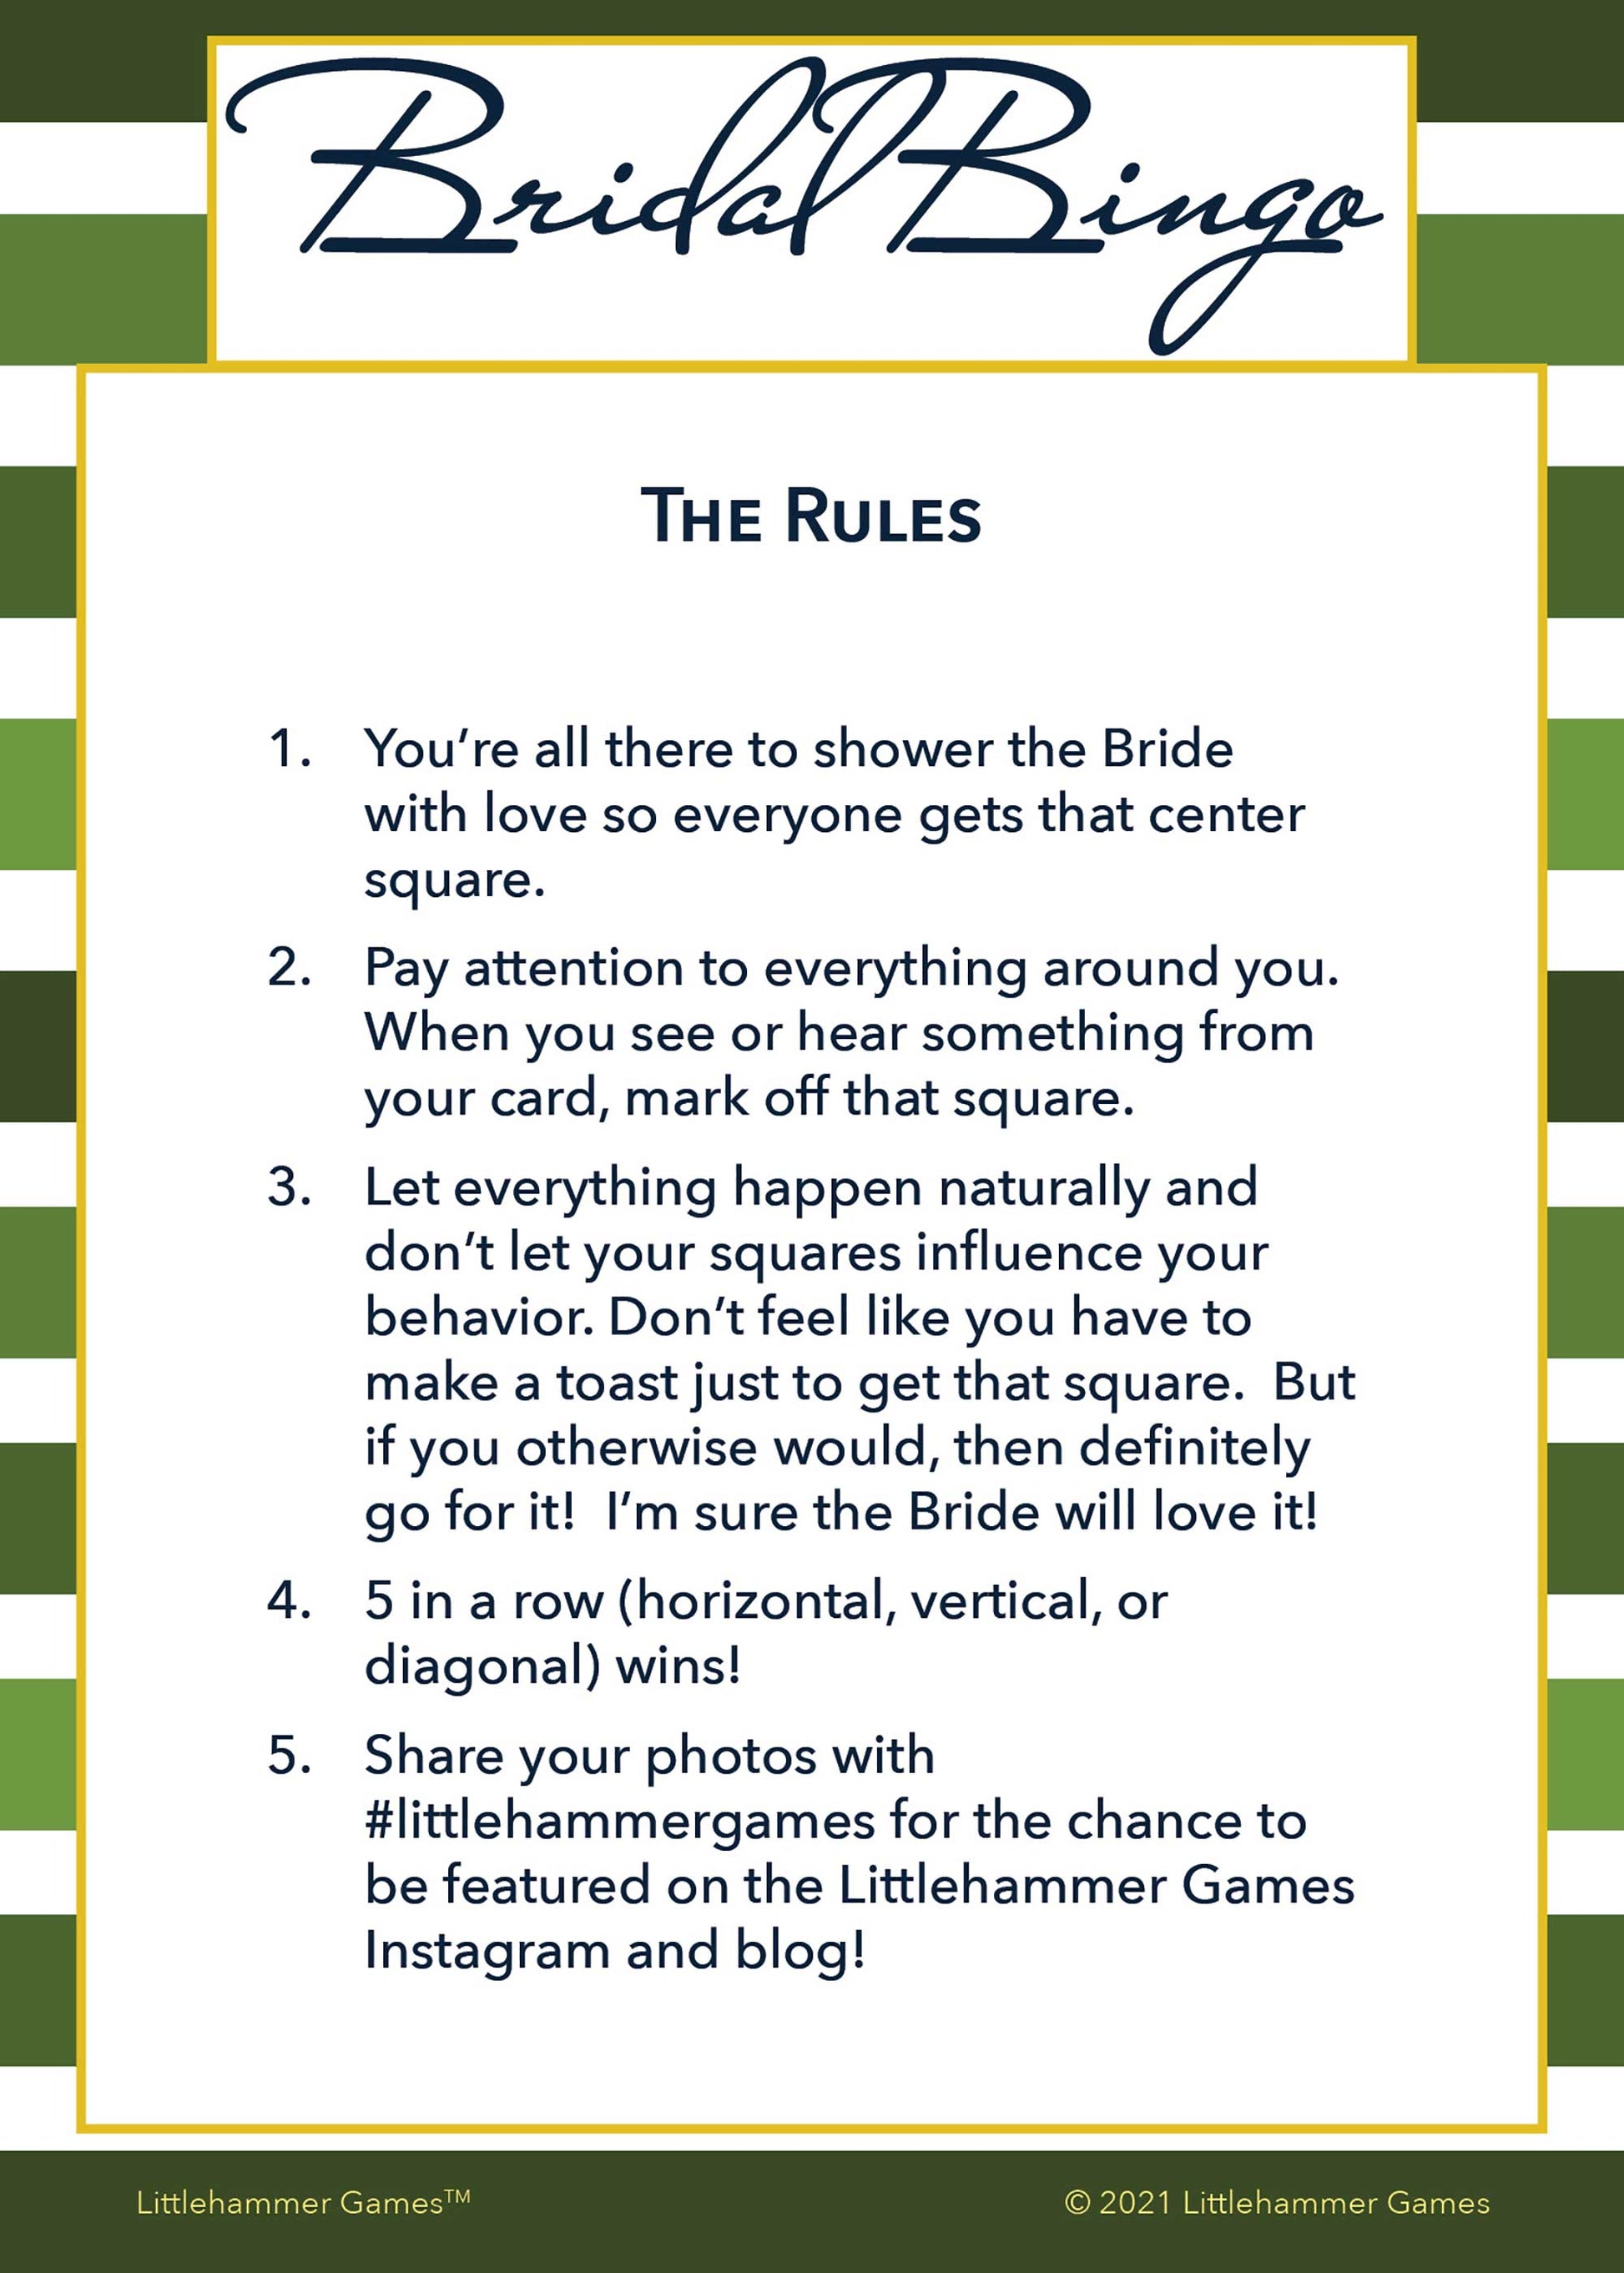 Bridal Bingo rules card on a green-striped background